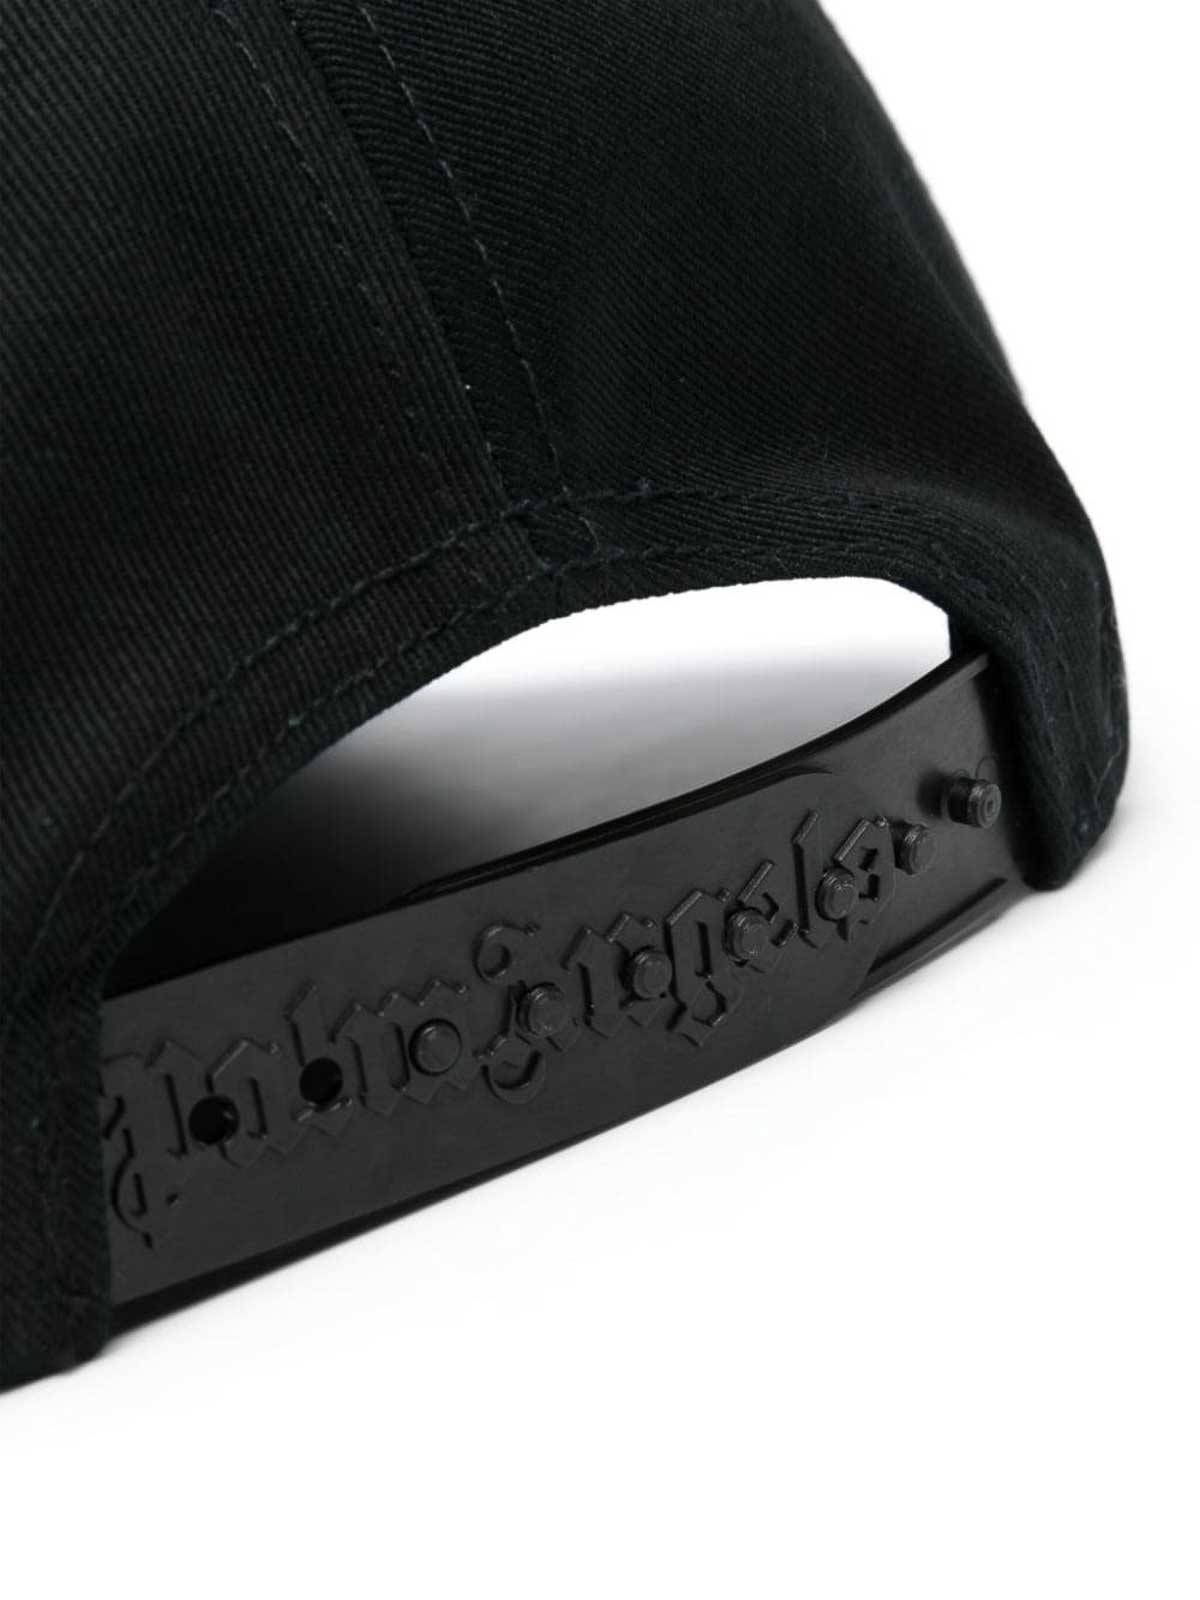 Shop Palm Angels Logo Embroidered Hat In Black